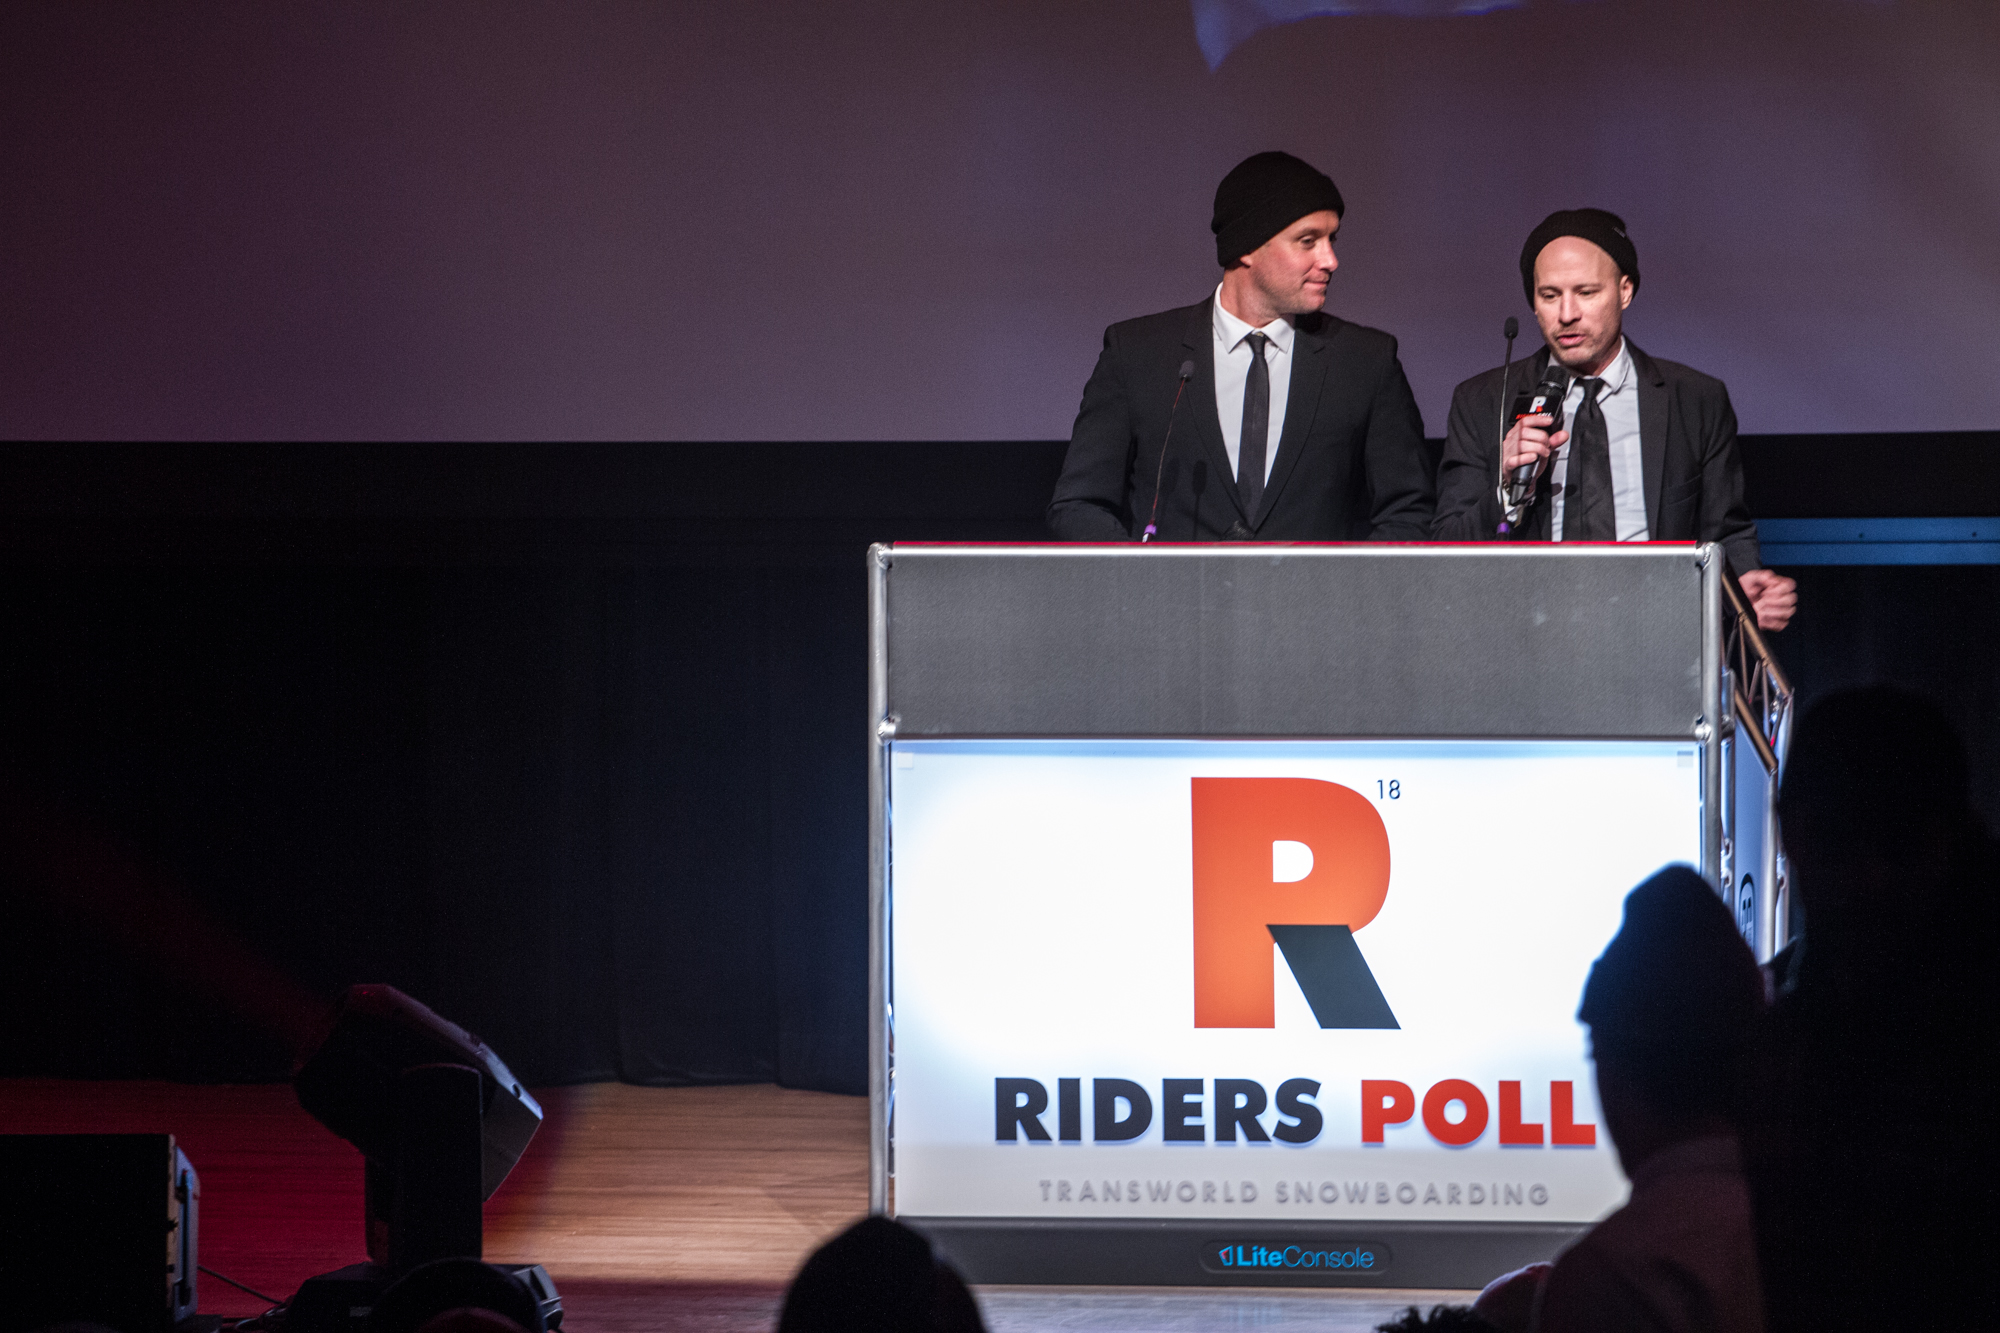 Eddie_wall_peter_line_riders_poll_awards_durso 2